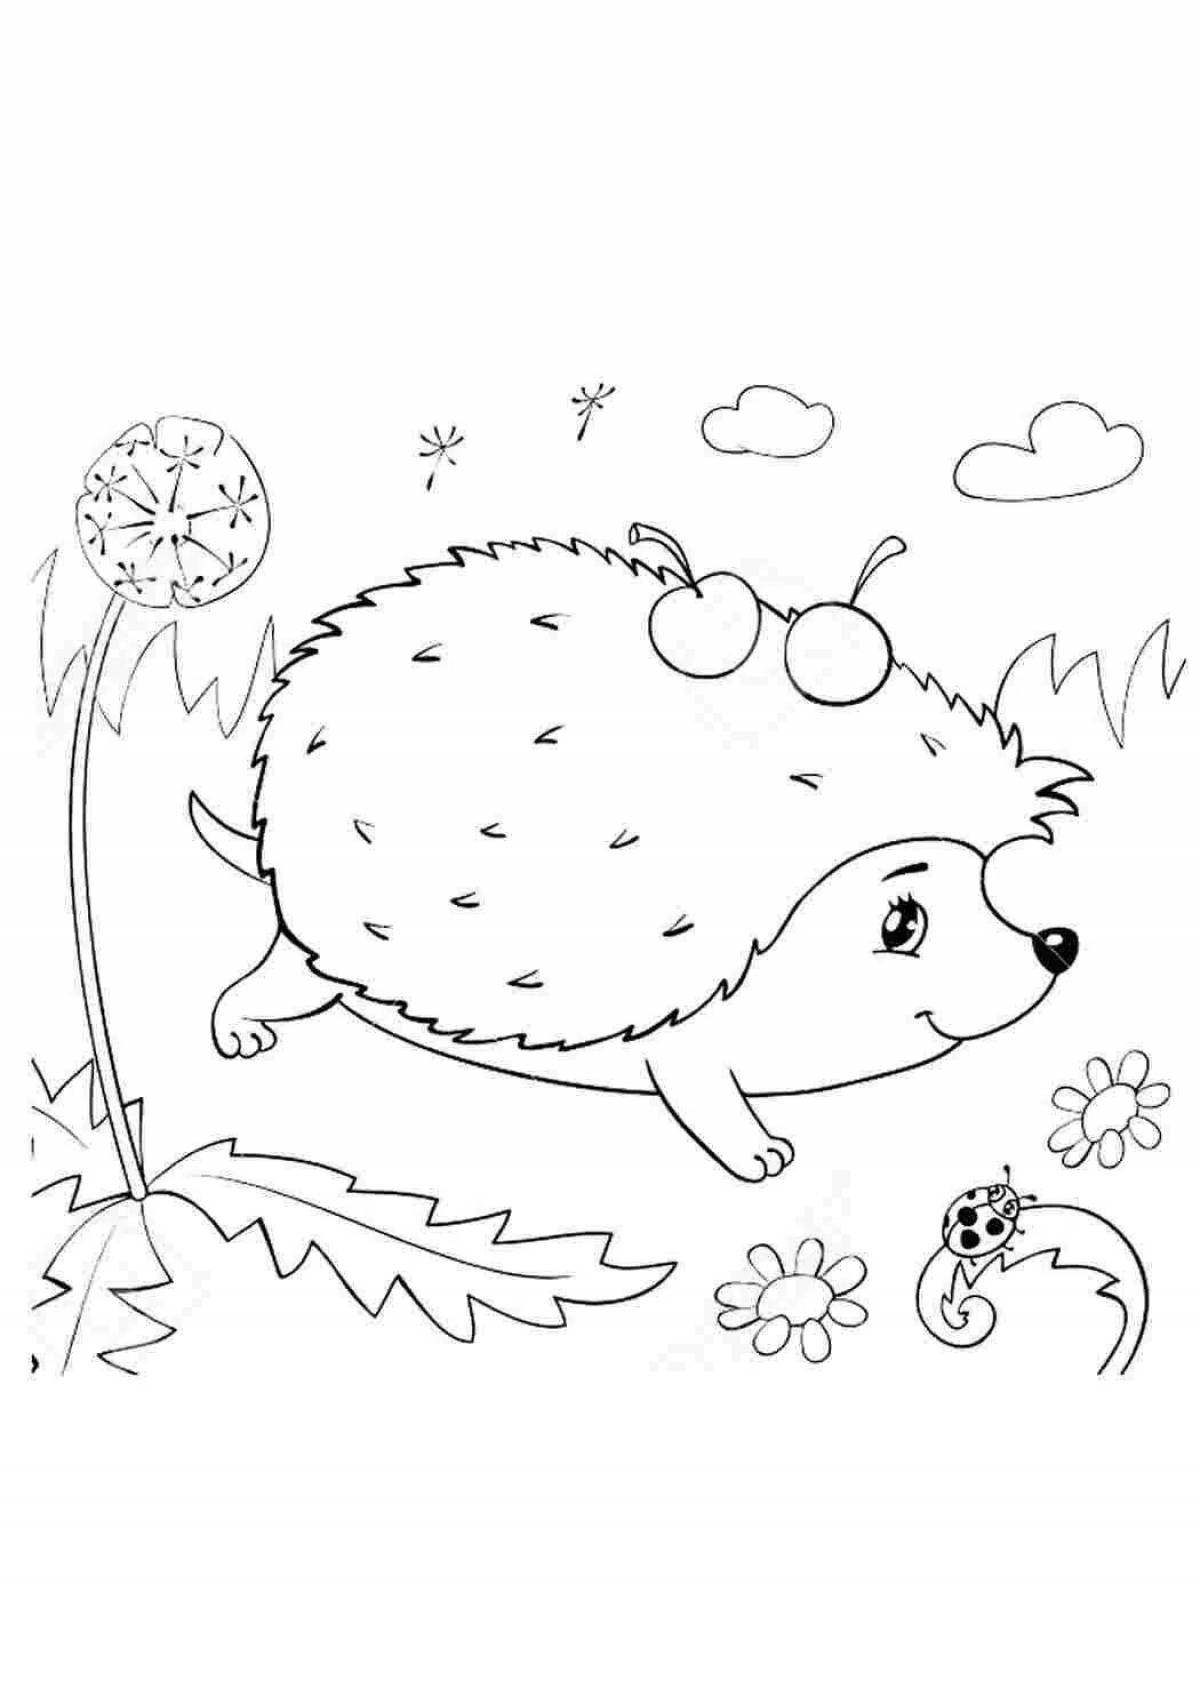 Colorful hedgehog coloring book